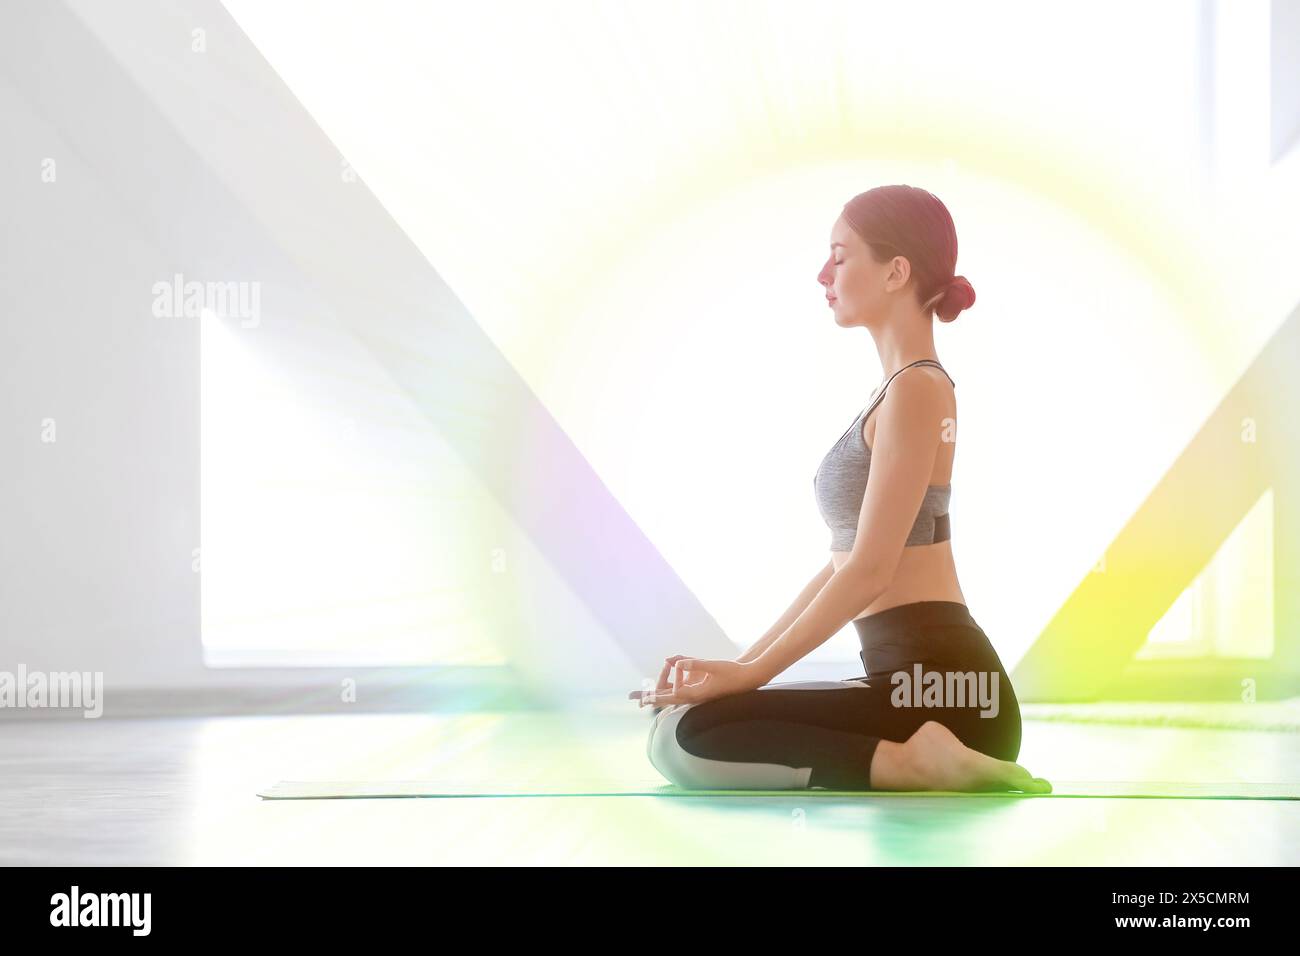 Meditierende junge Frau, die Yoga im Fitnessstudio praktiziert Stockfoto